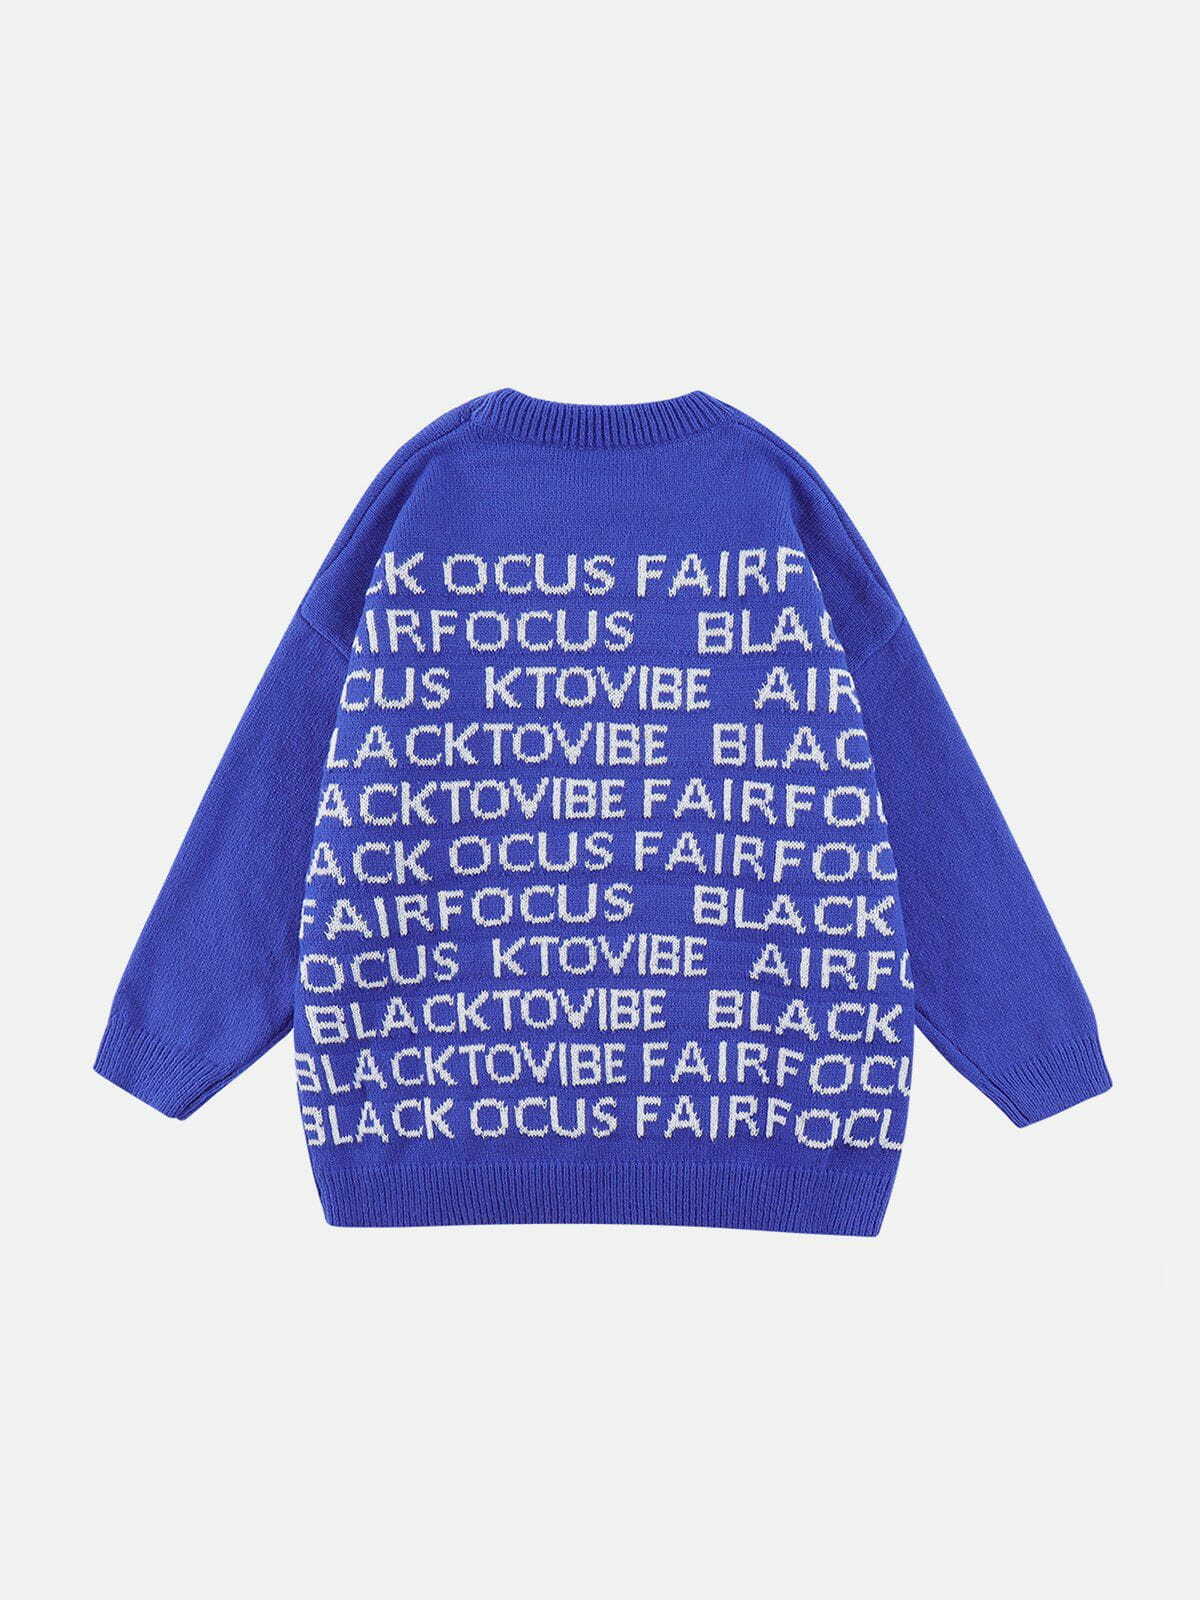 retro alphabet sweater edgy & vibrant streetwear 6534